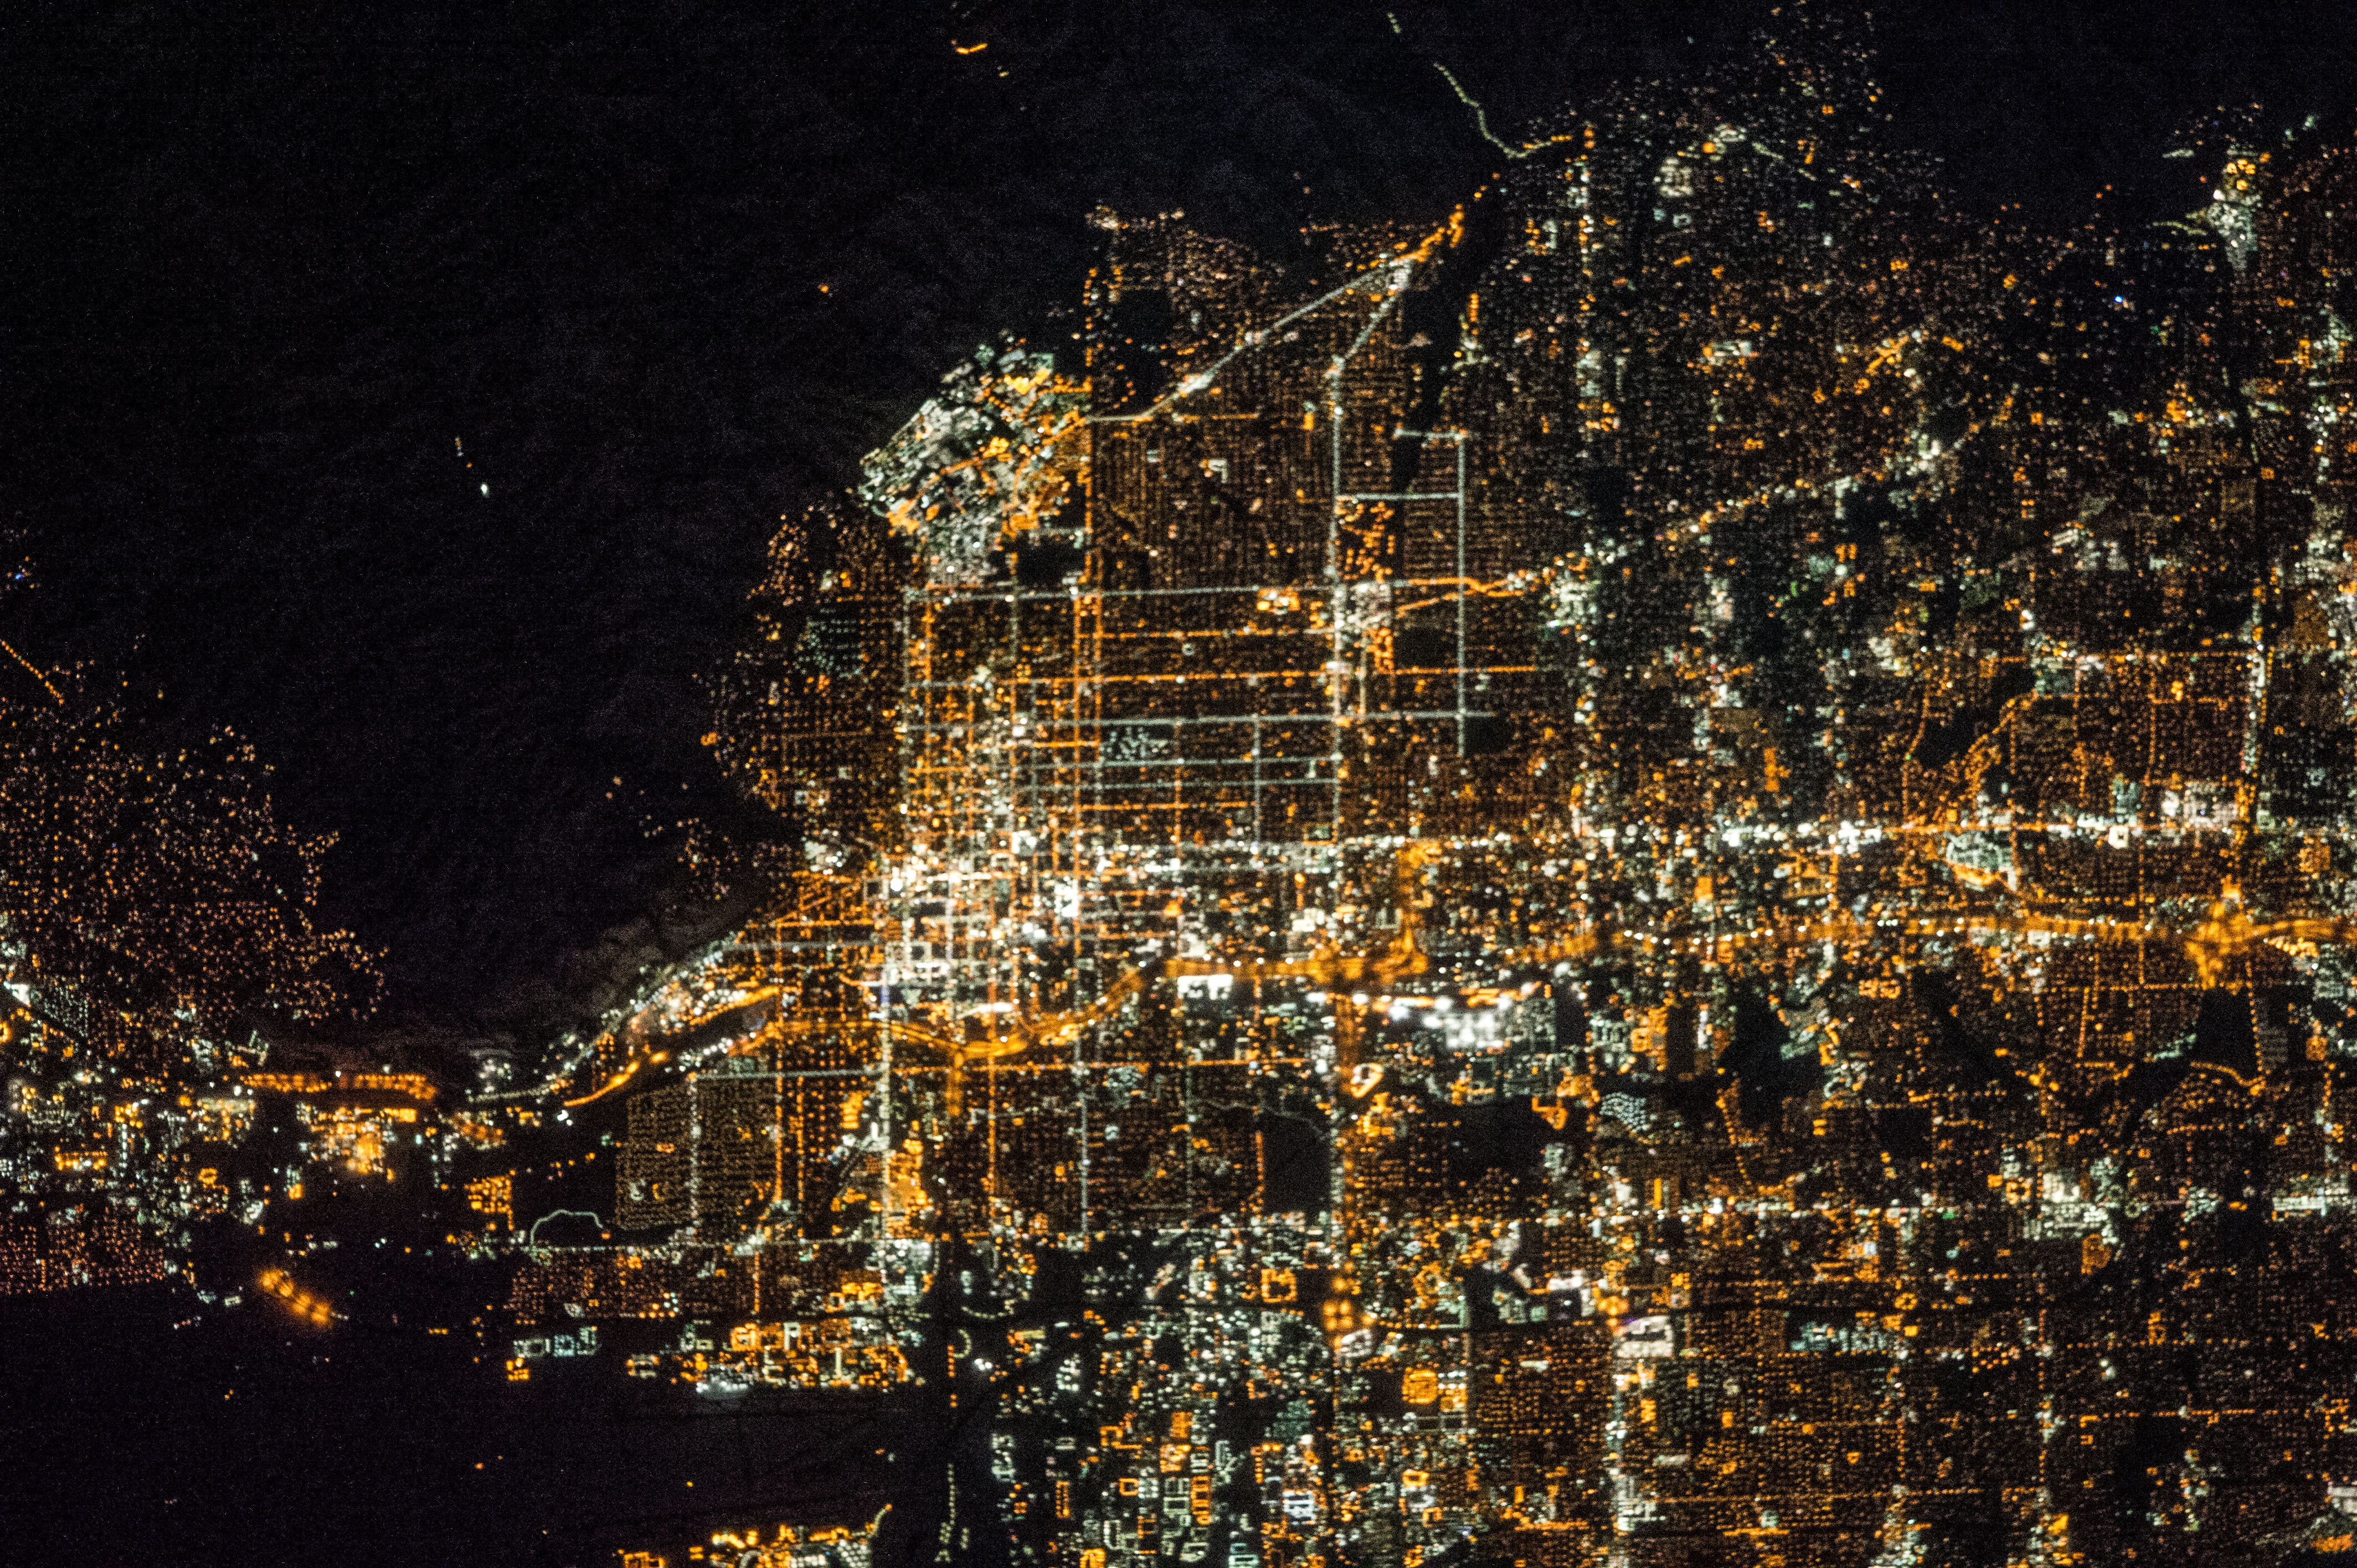 A Nighttime View of Salt Lake City, Utah | NASA